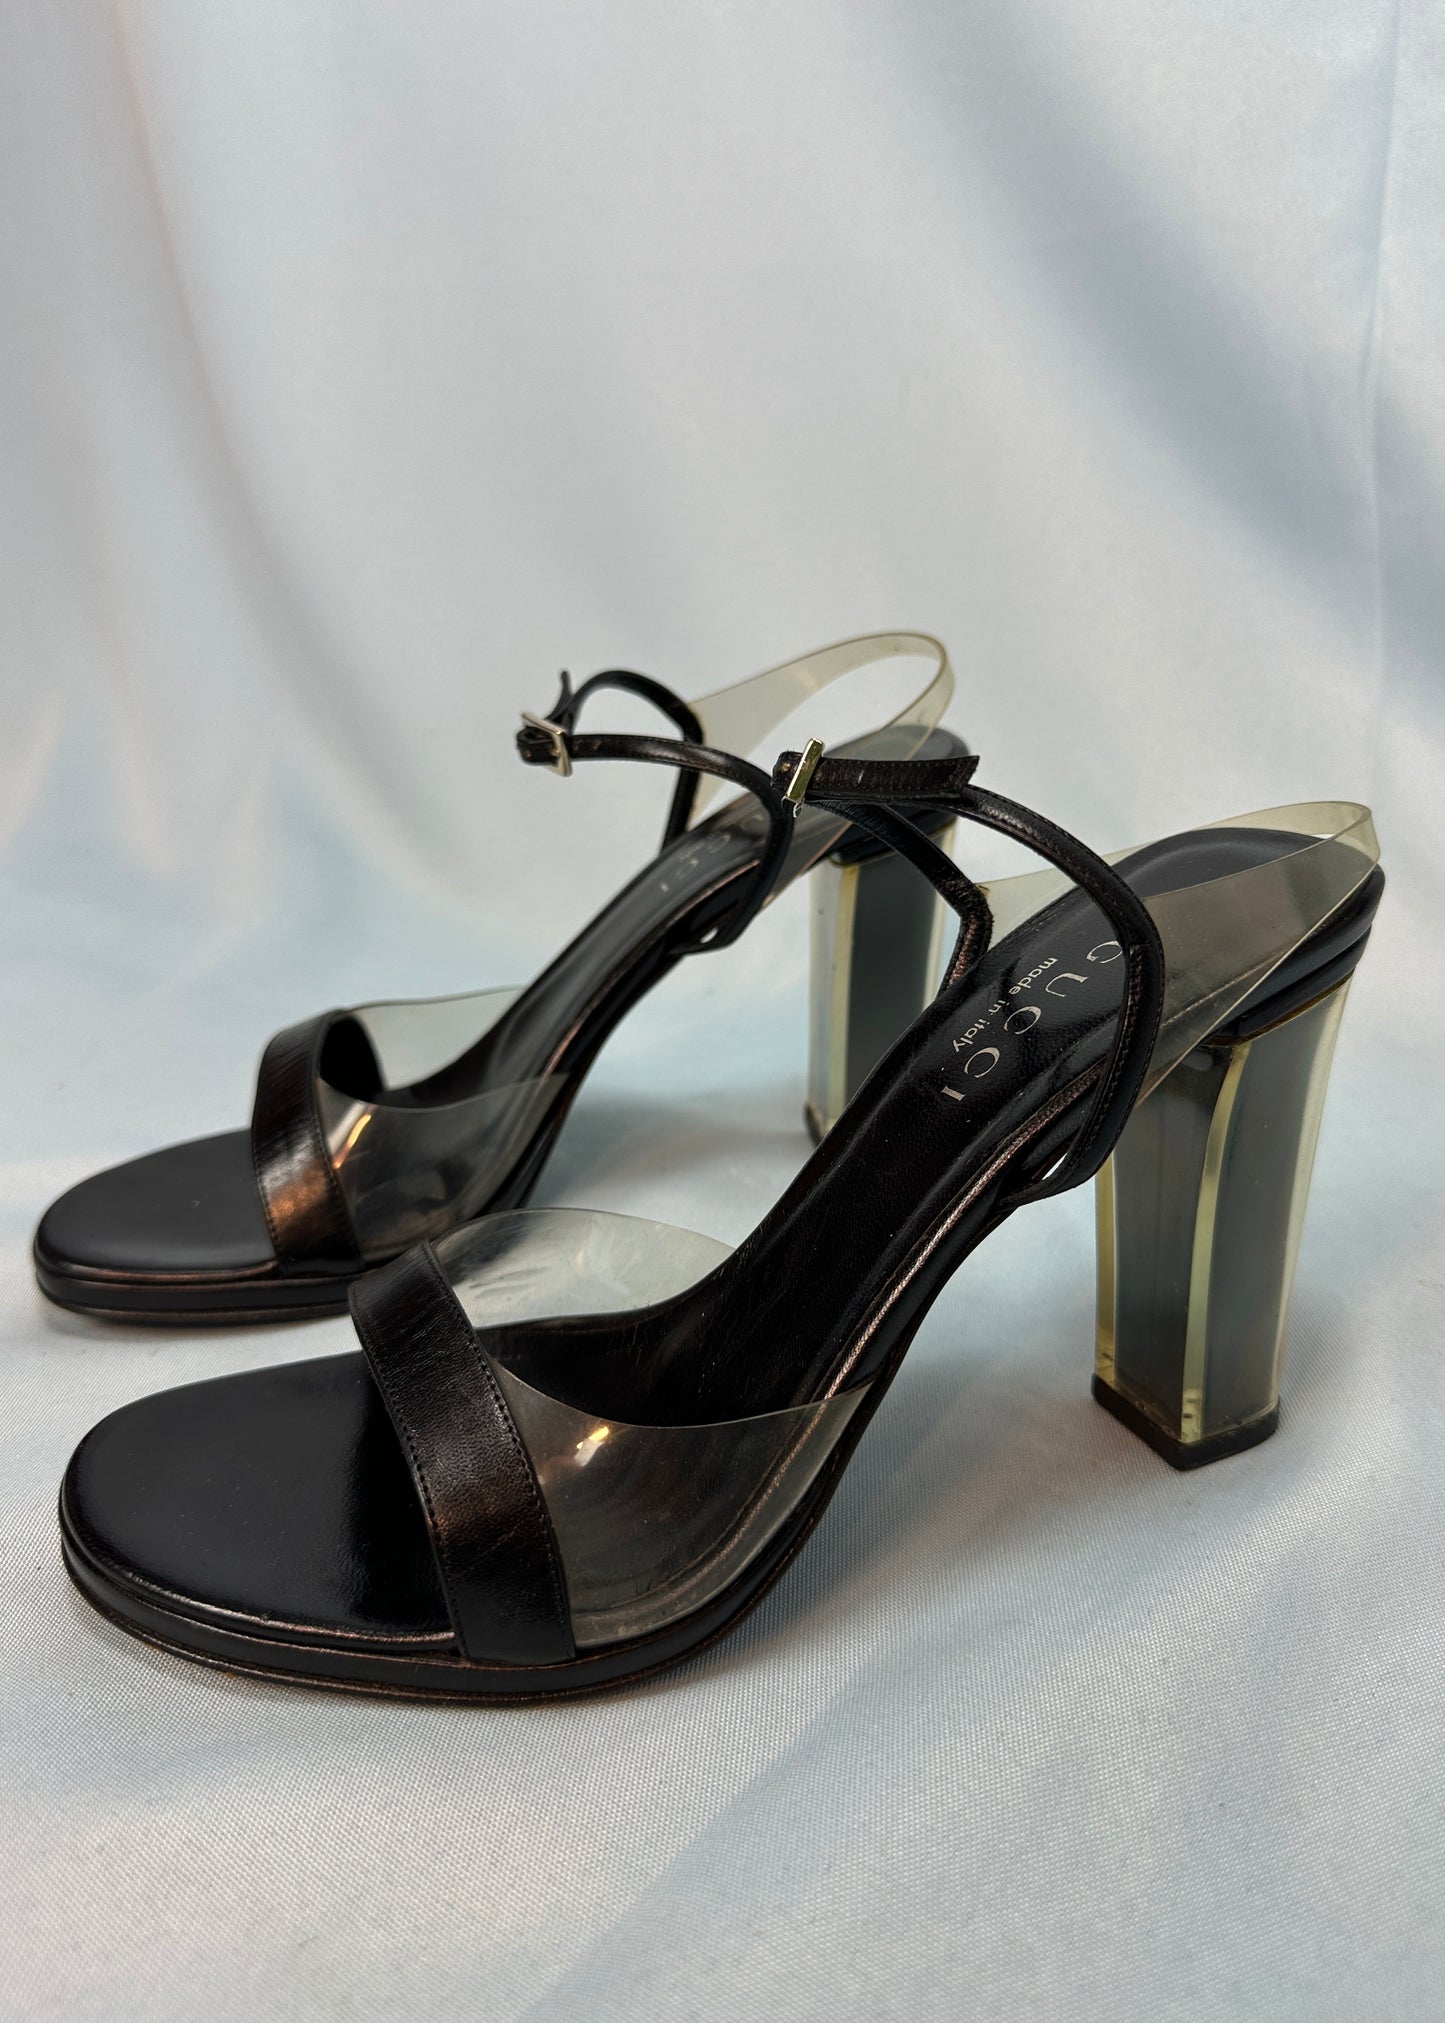 Gucci by Tom Ford Black Perspex Heels